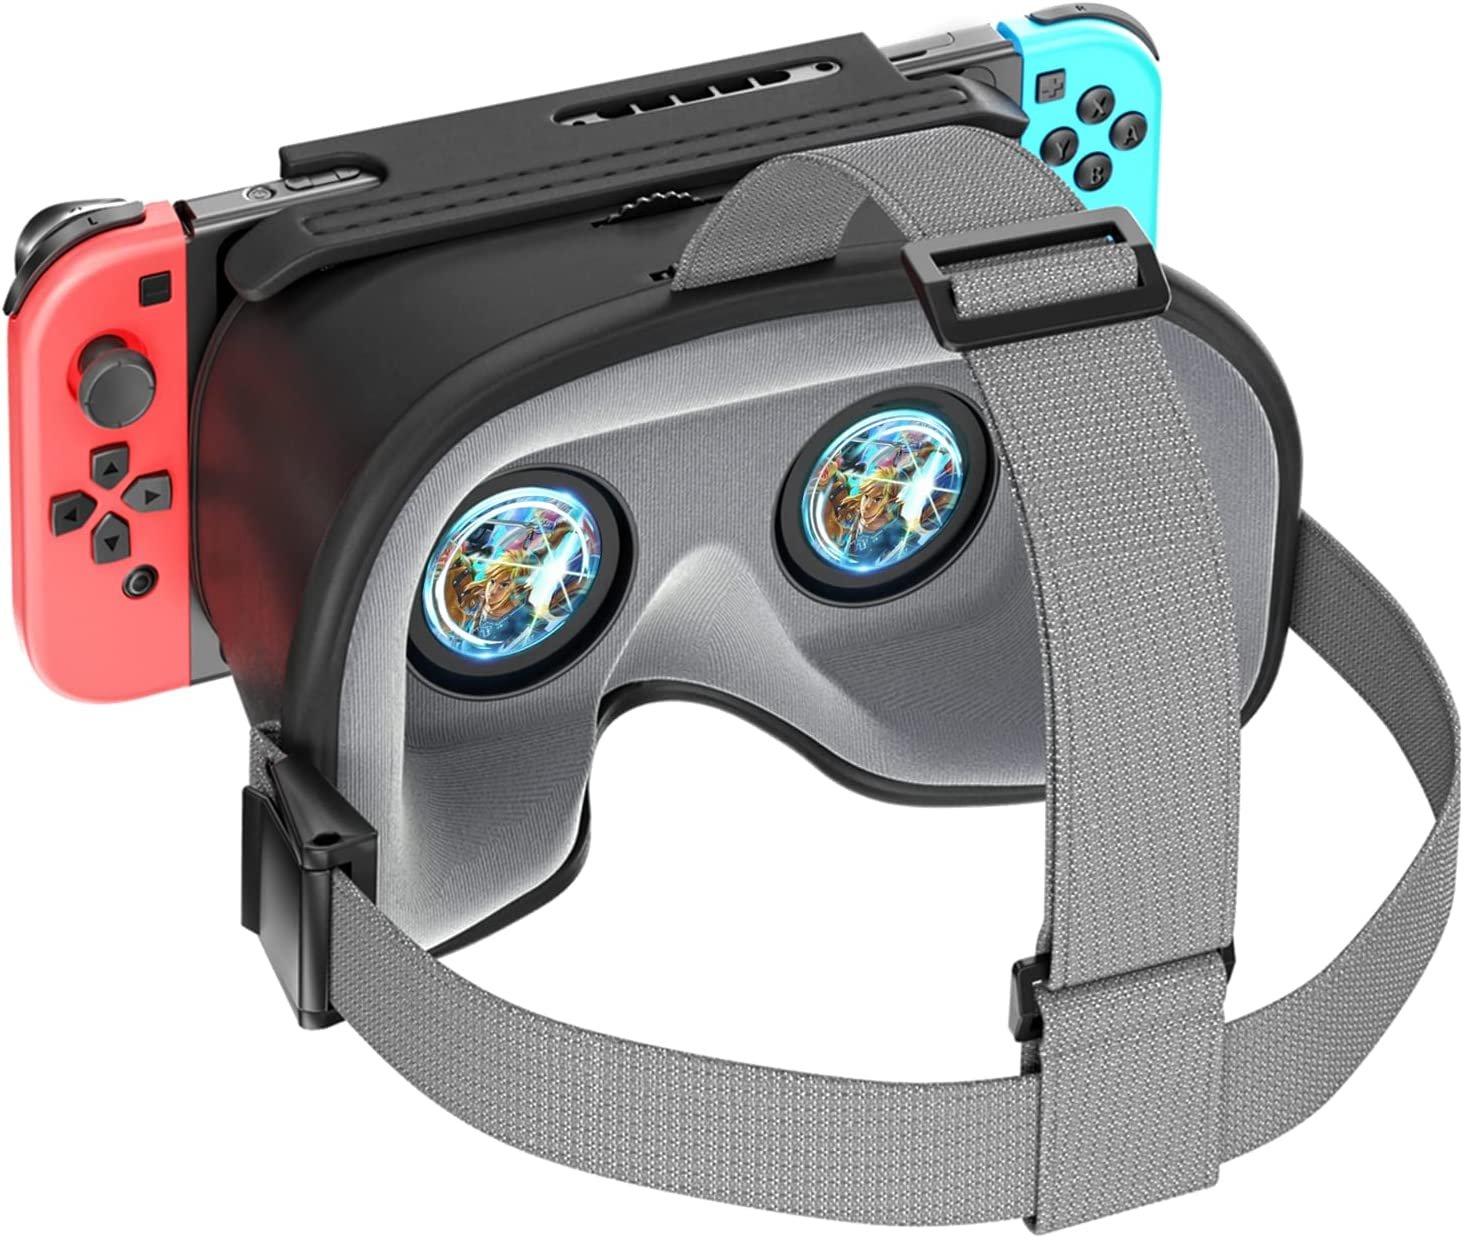 Гарнитура Switch VR, совместимая с Nintendo Switch